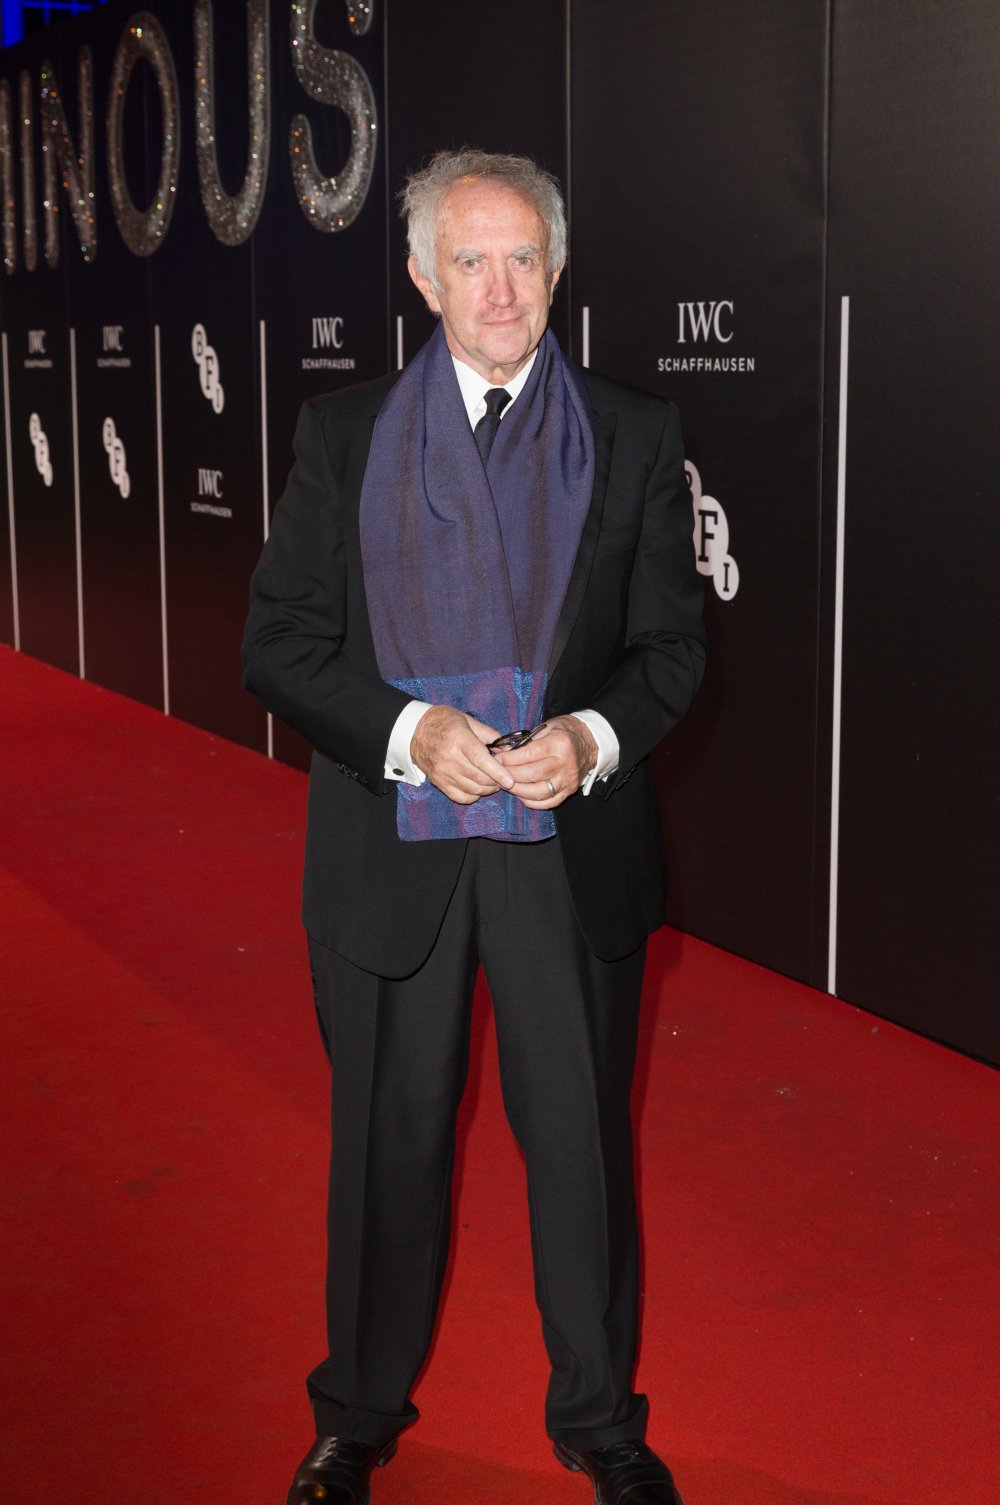 Jonathan Pryce attends the BFI LUMINOUS gala 2015